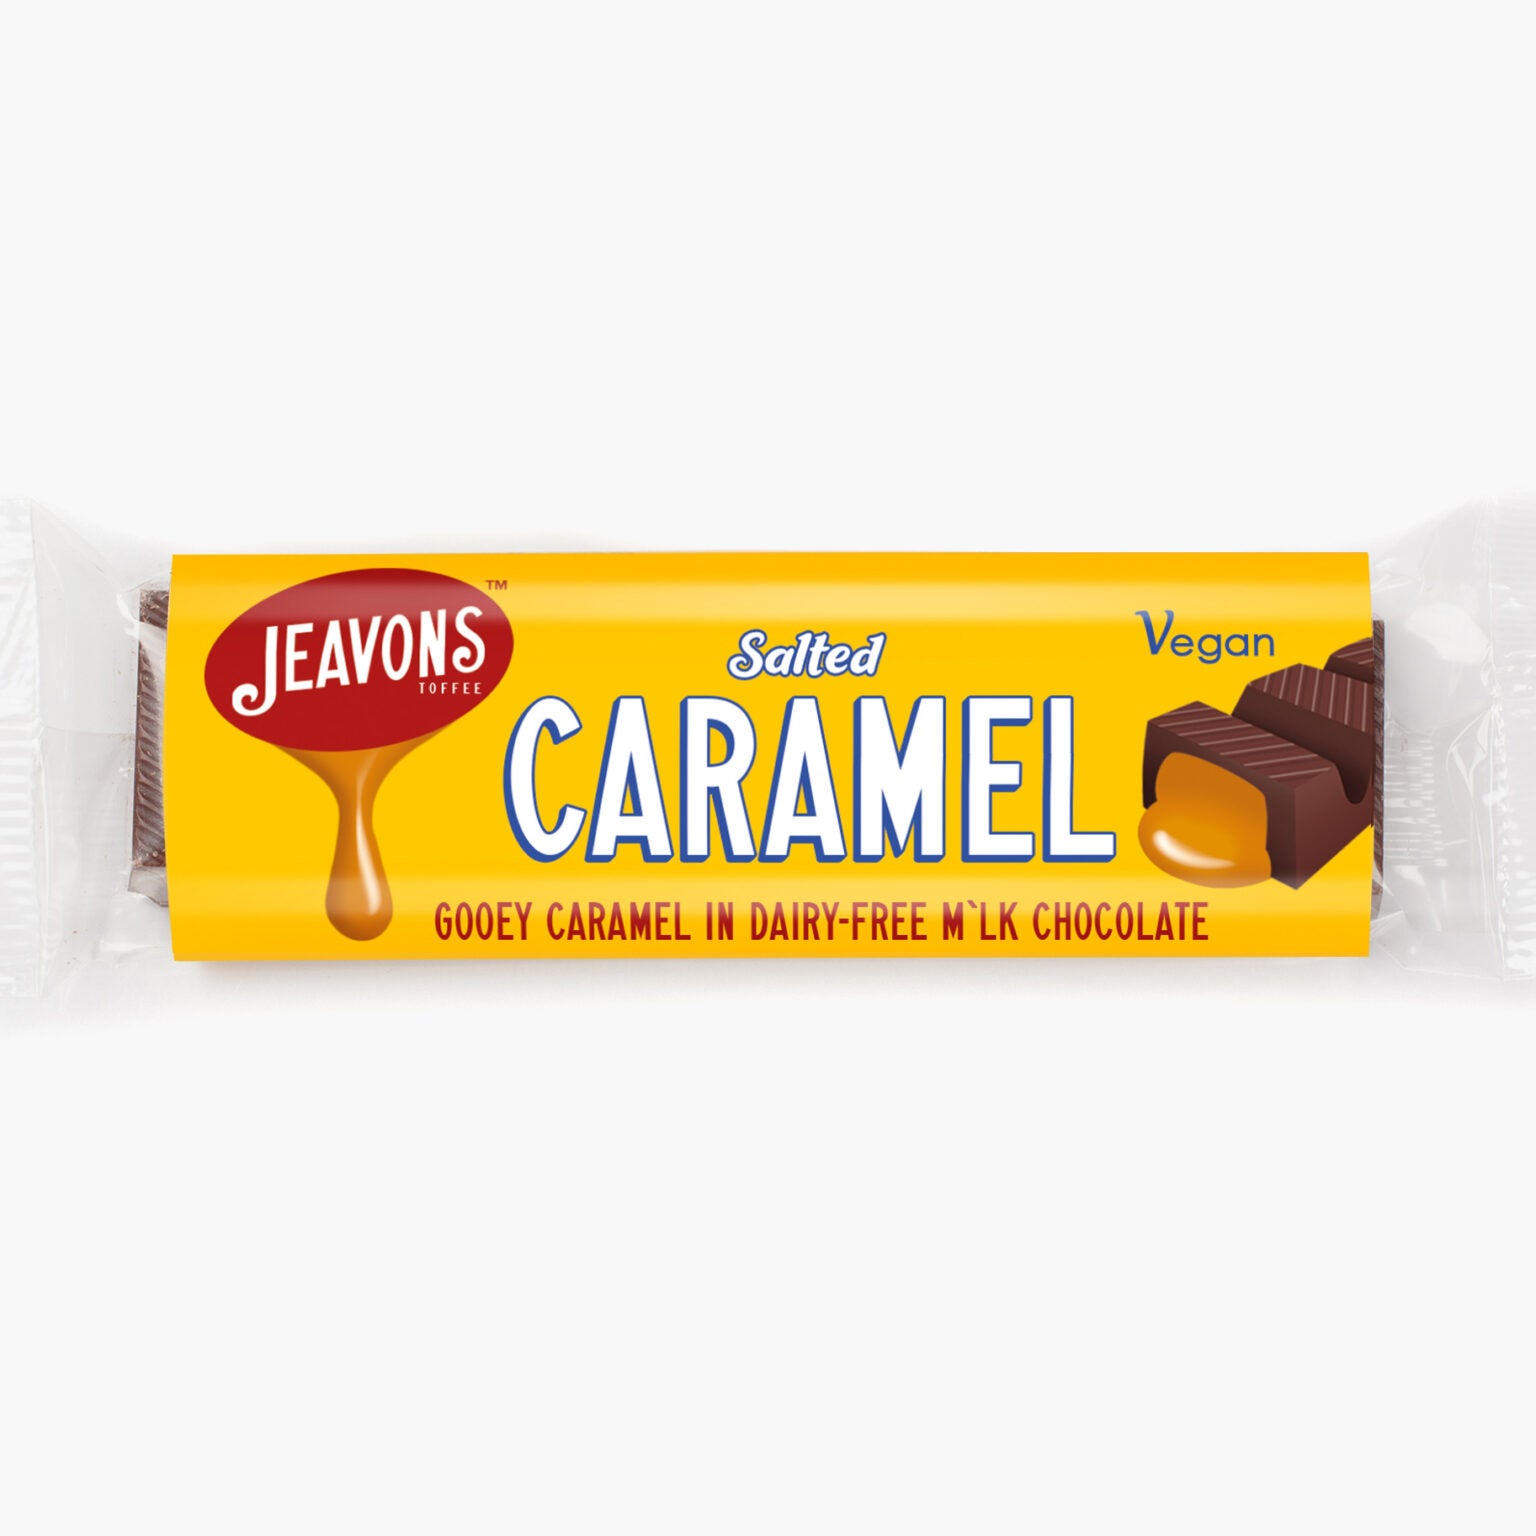 Jeavons - Caramel - 44g - GF (not coeliac)